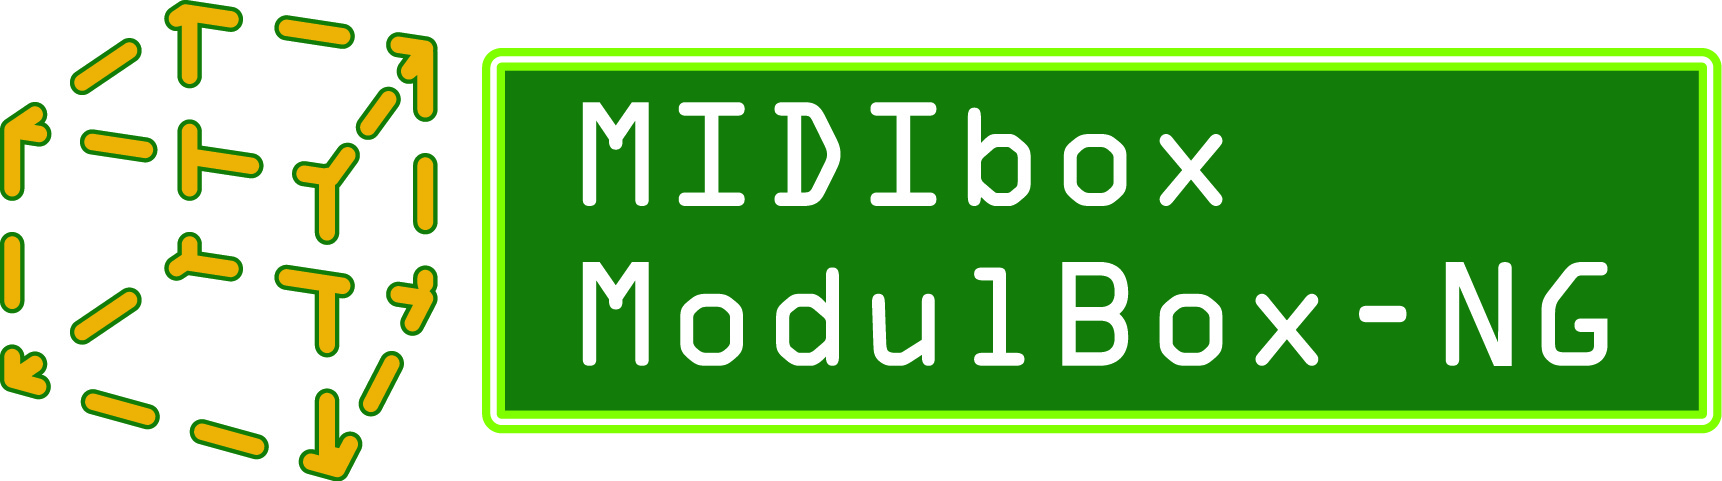 modulbox-logo.jpg